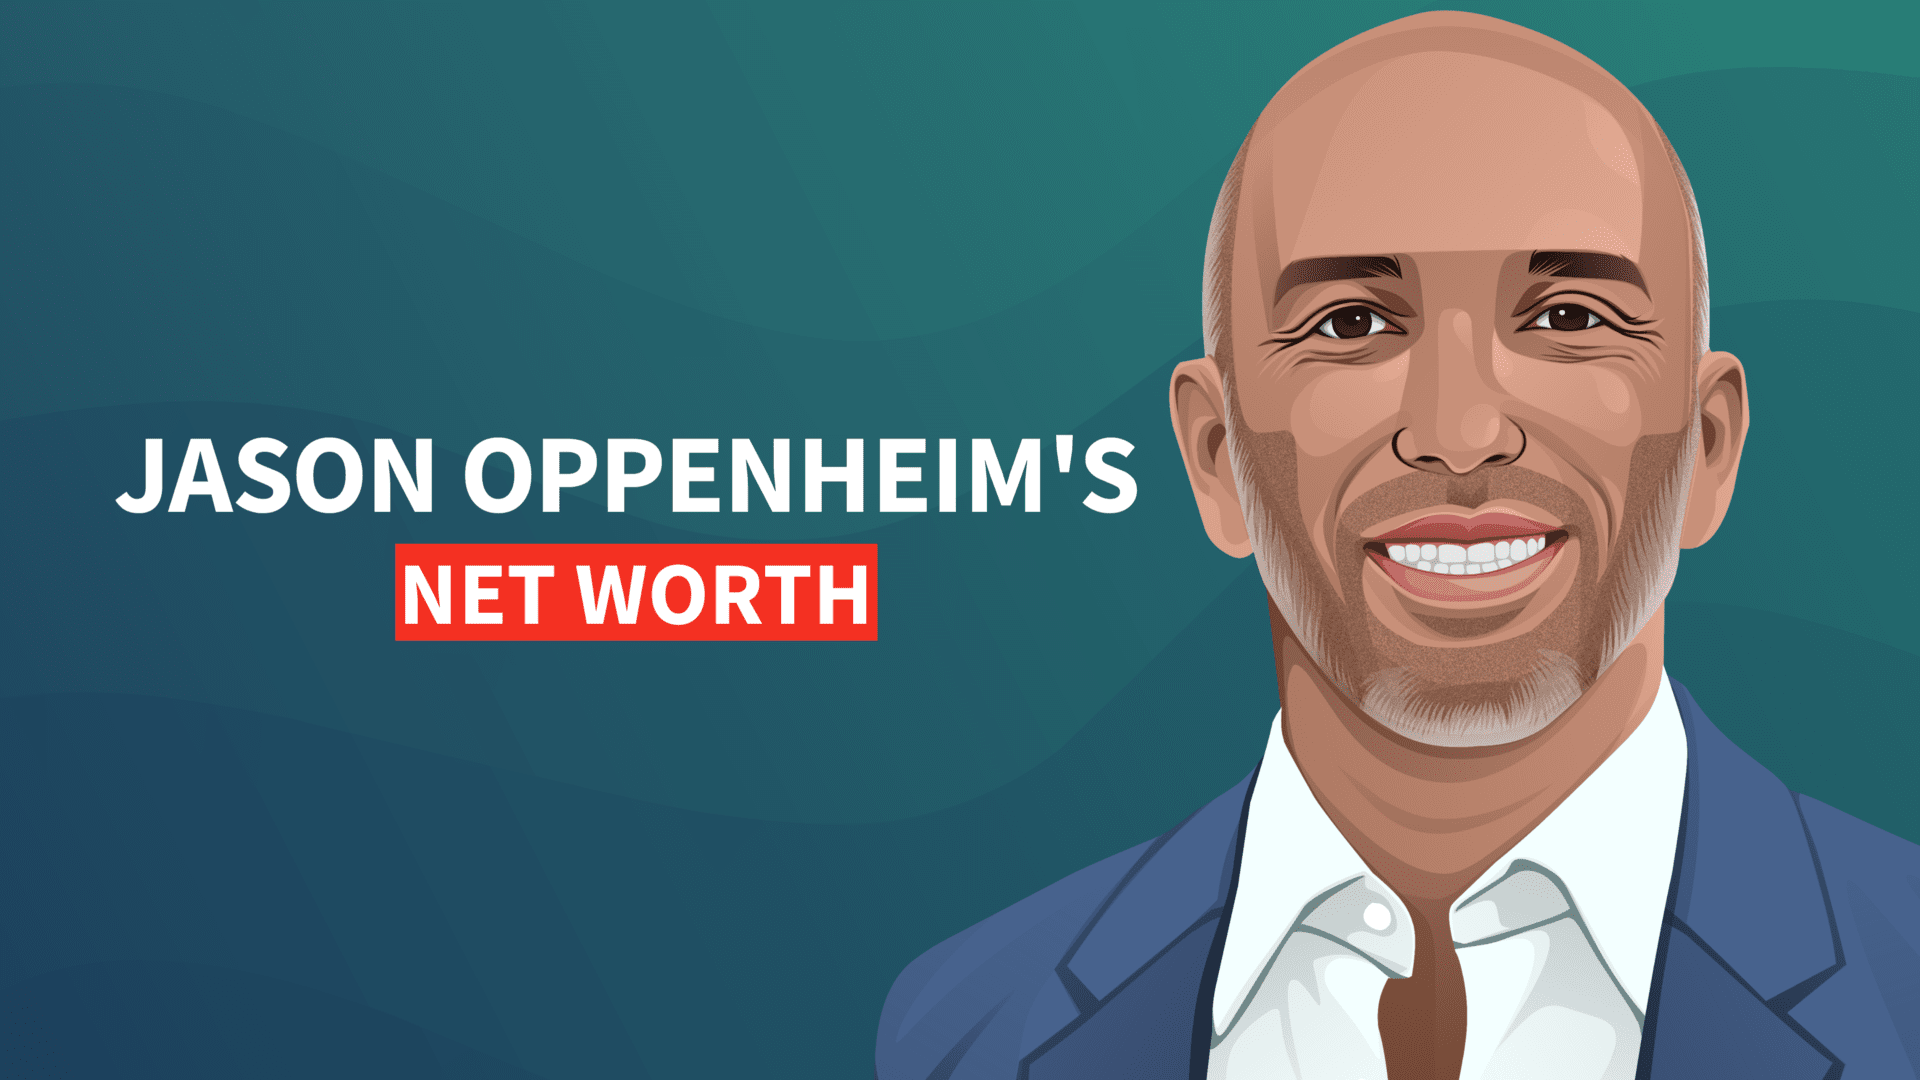 Jason Oppenheim's net worth